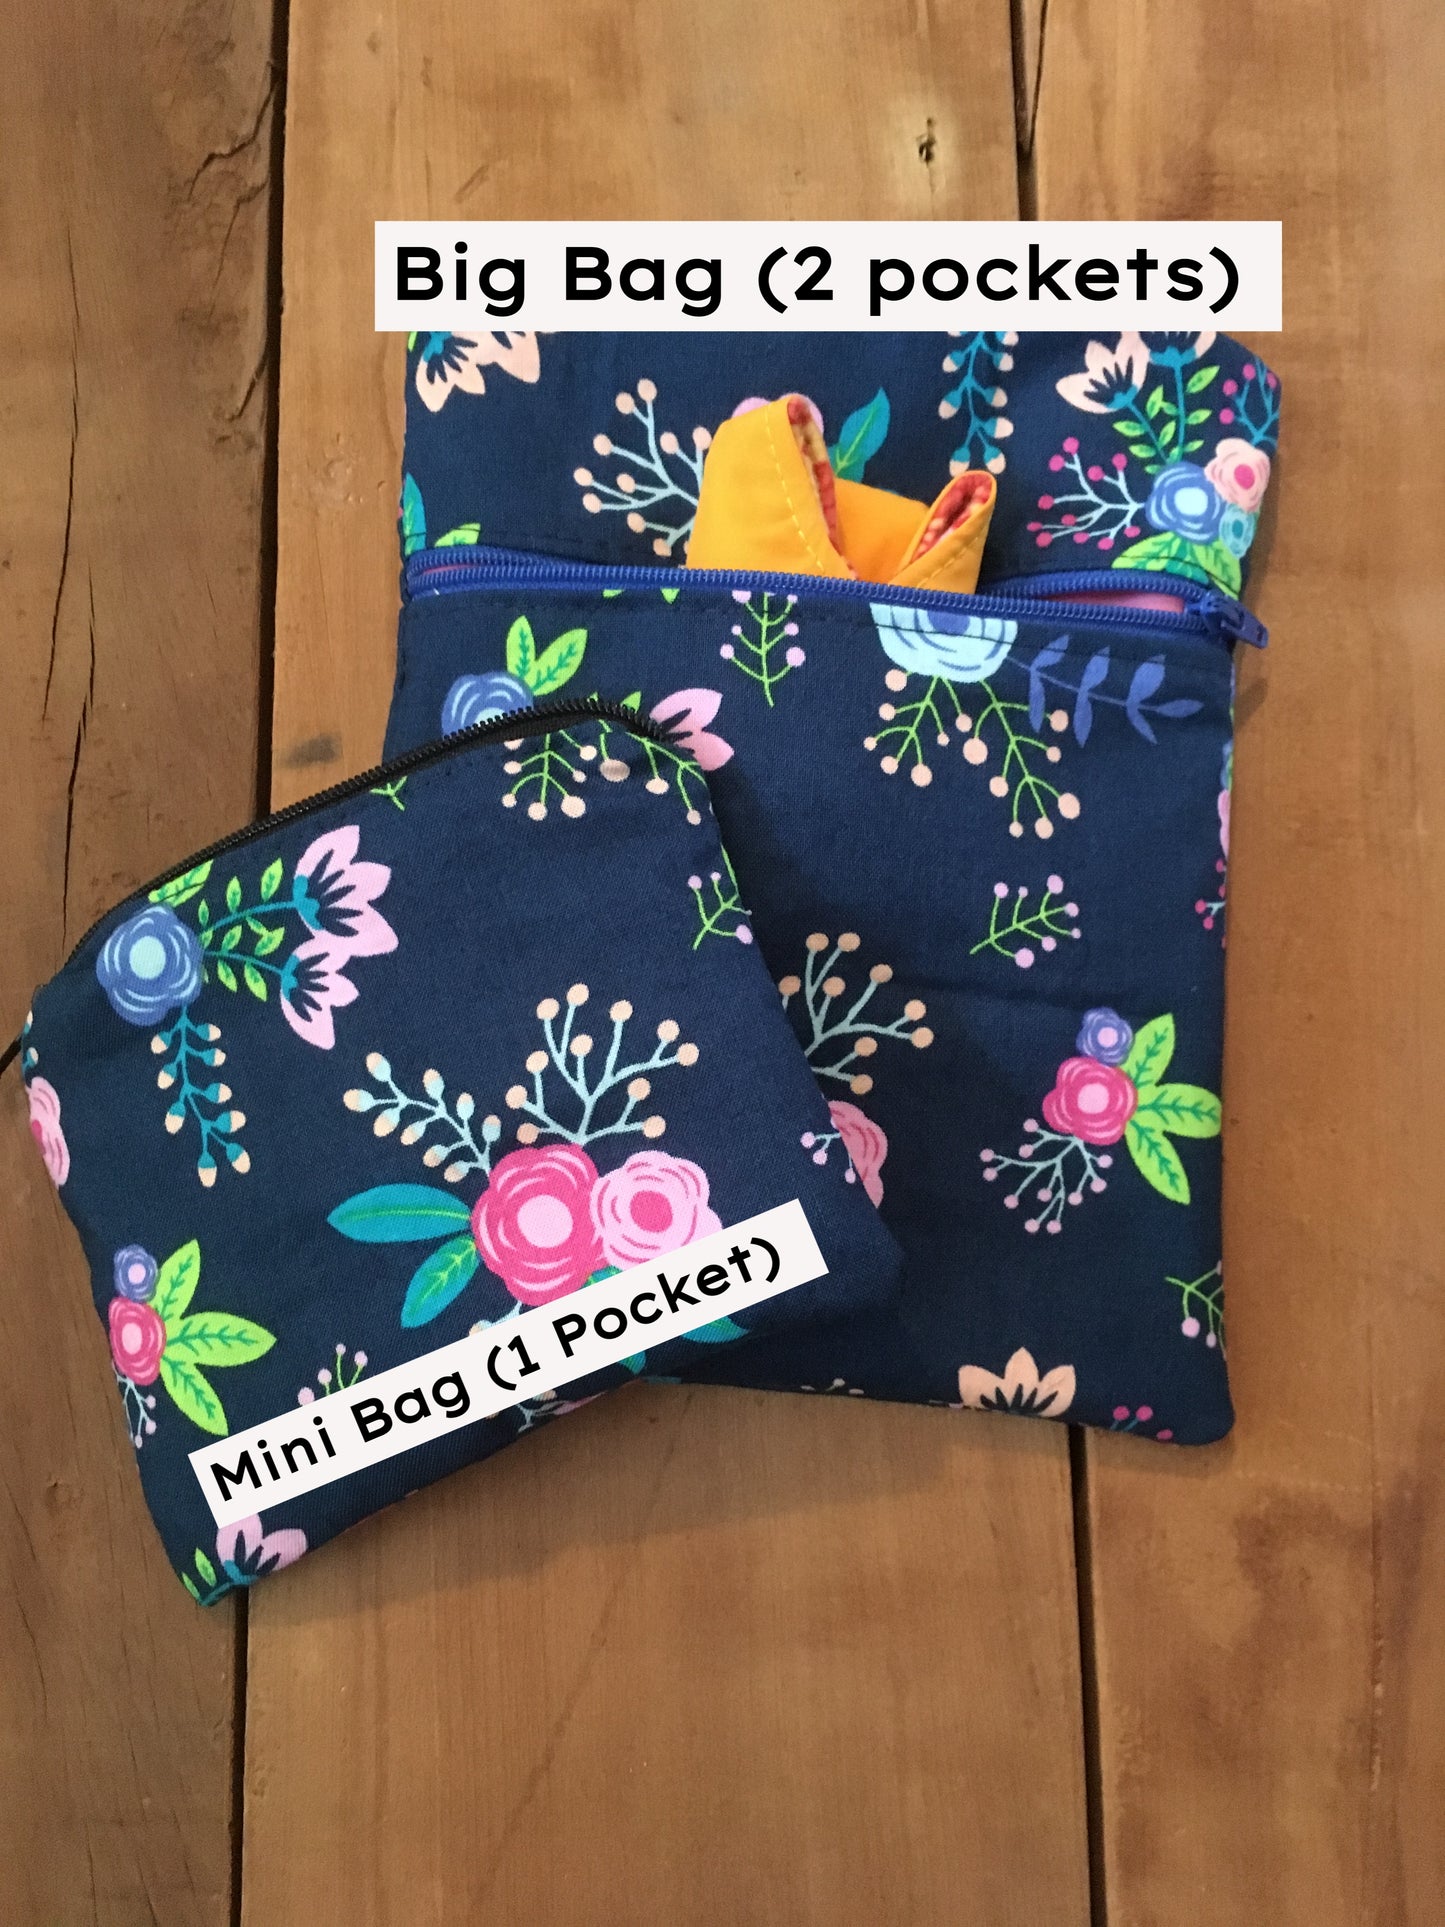 big bag has 2 pockets and mini bag has 1 pocket